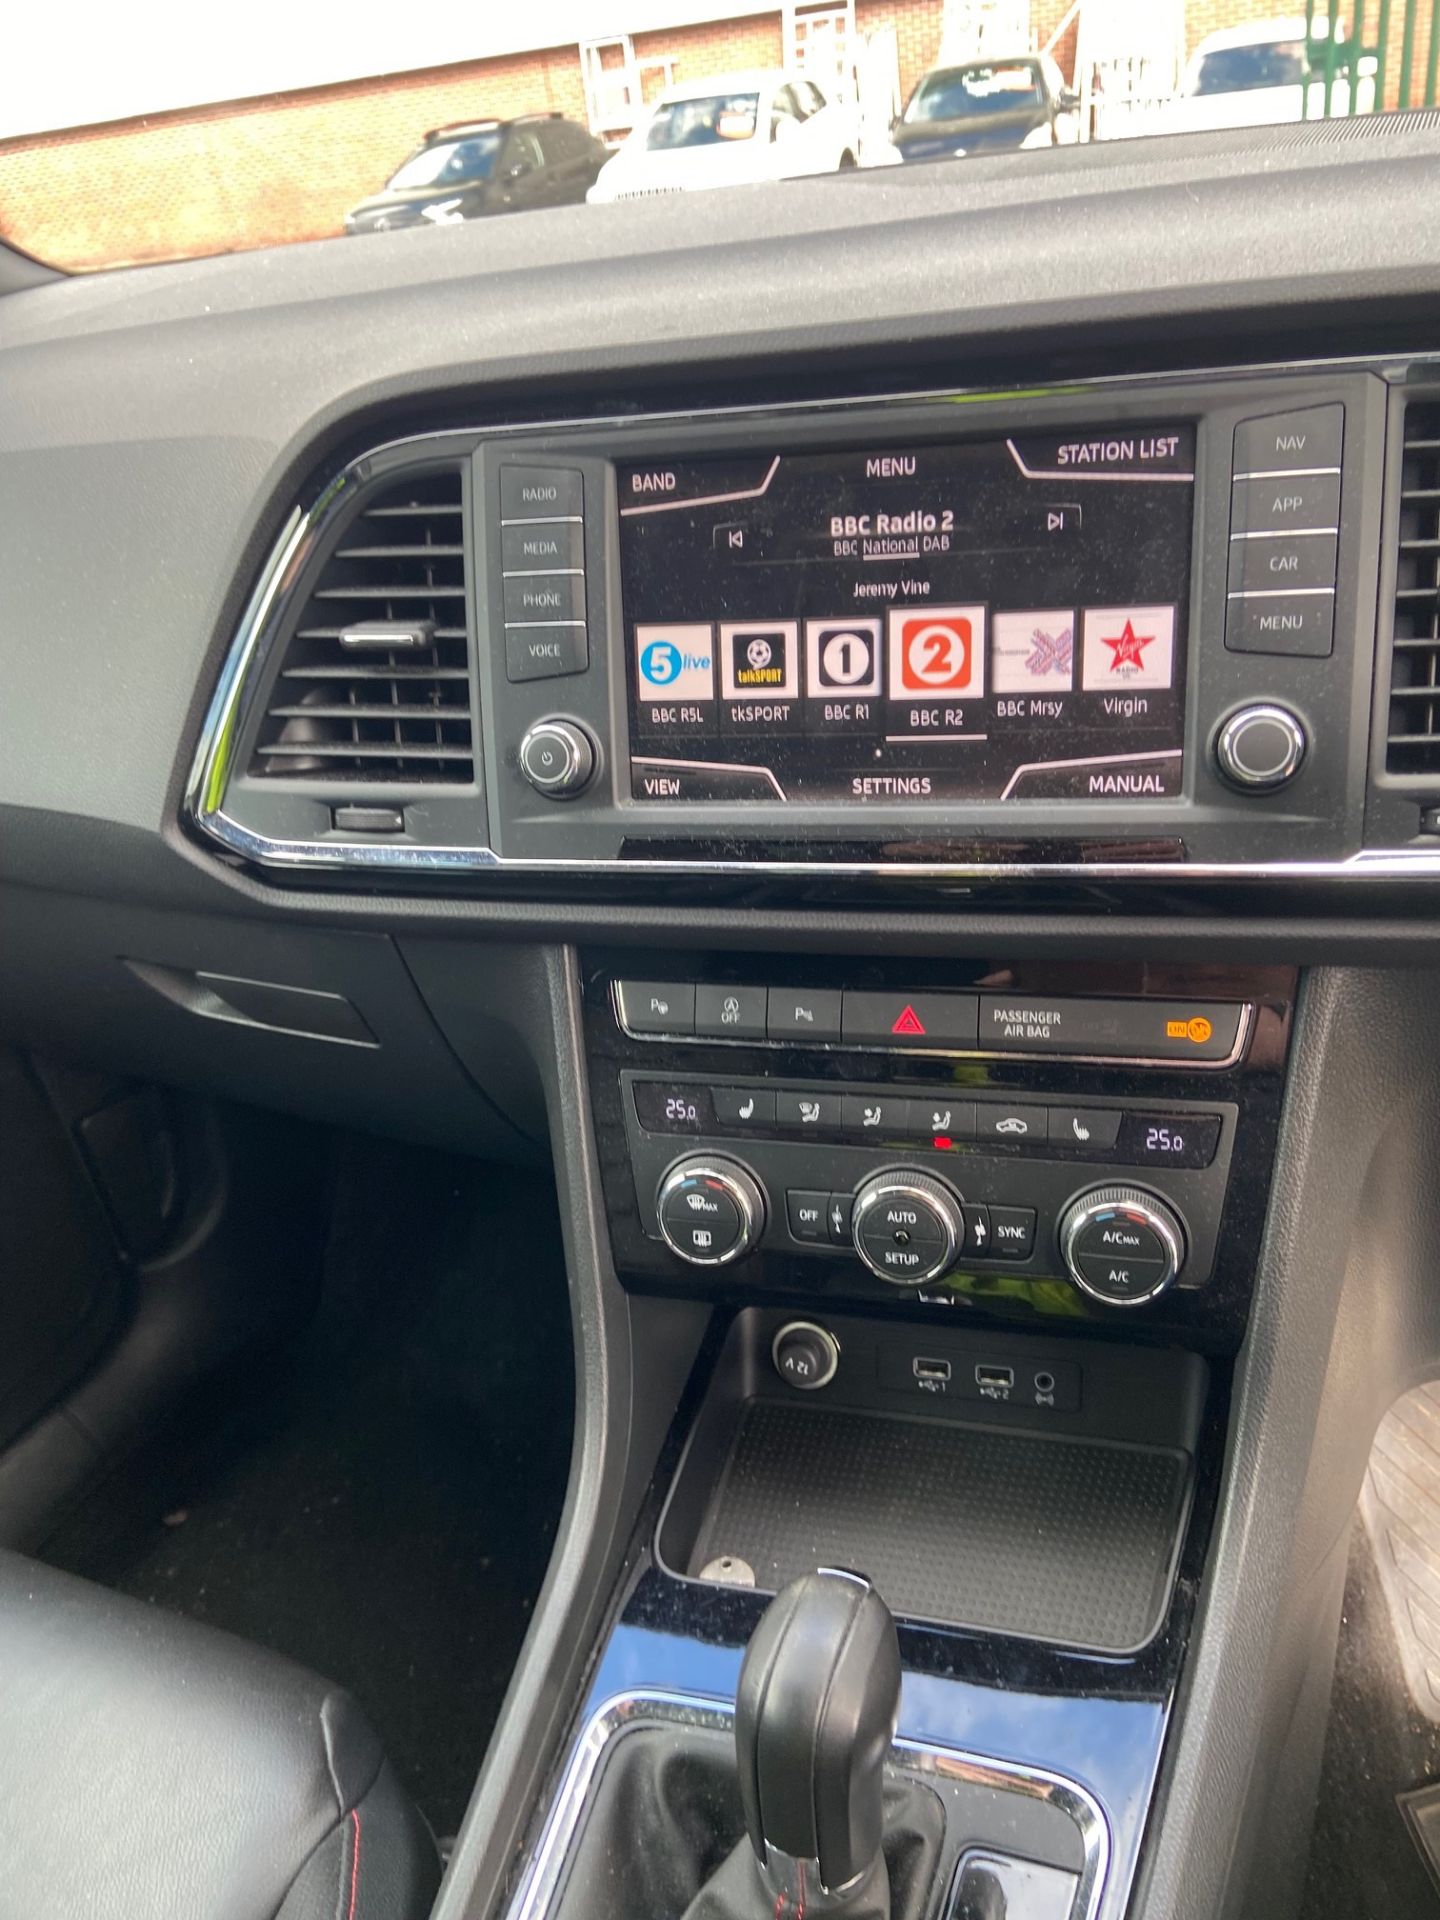 SEAT ATECA (YOM 2019) FR SPORT TSi 4 DRIVE 2.0 five door hatchback - petrol - black. - Image 8 of 13